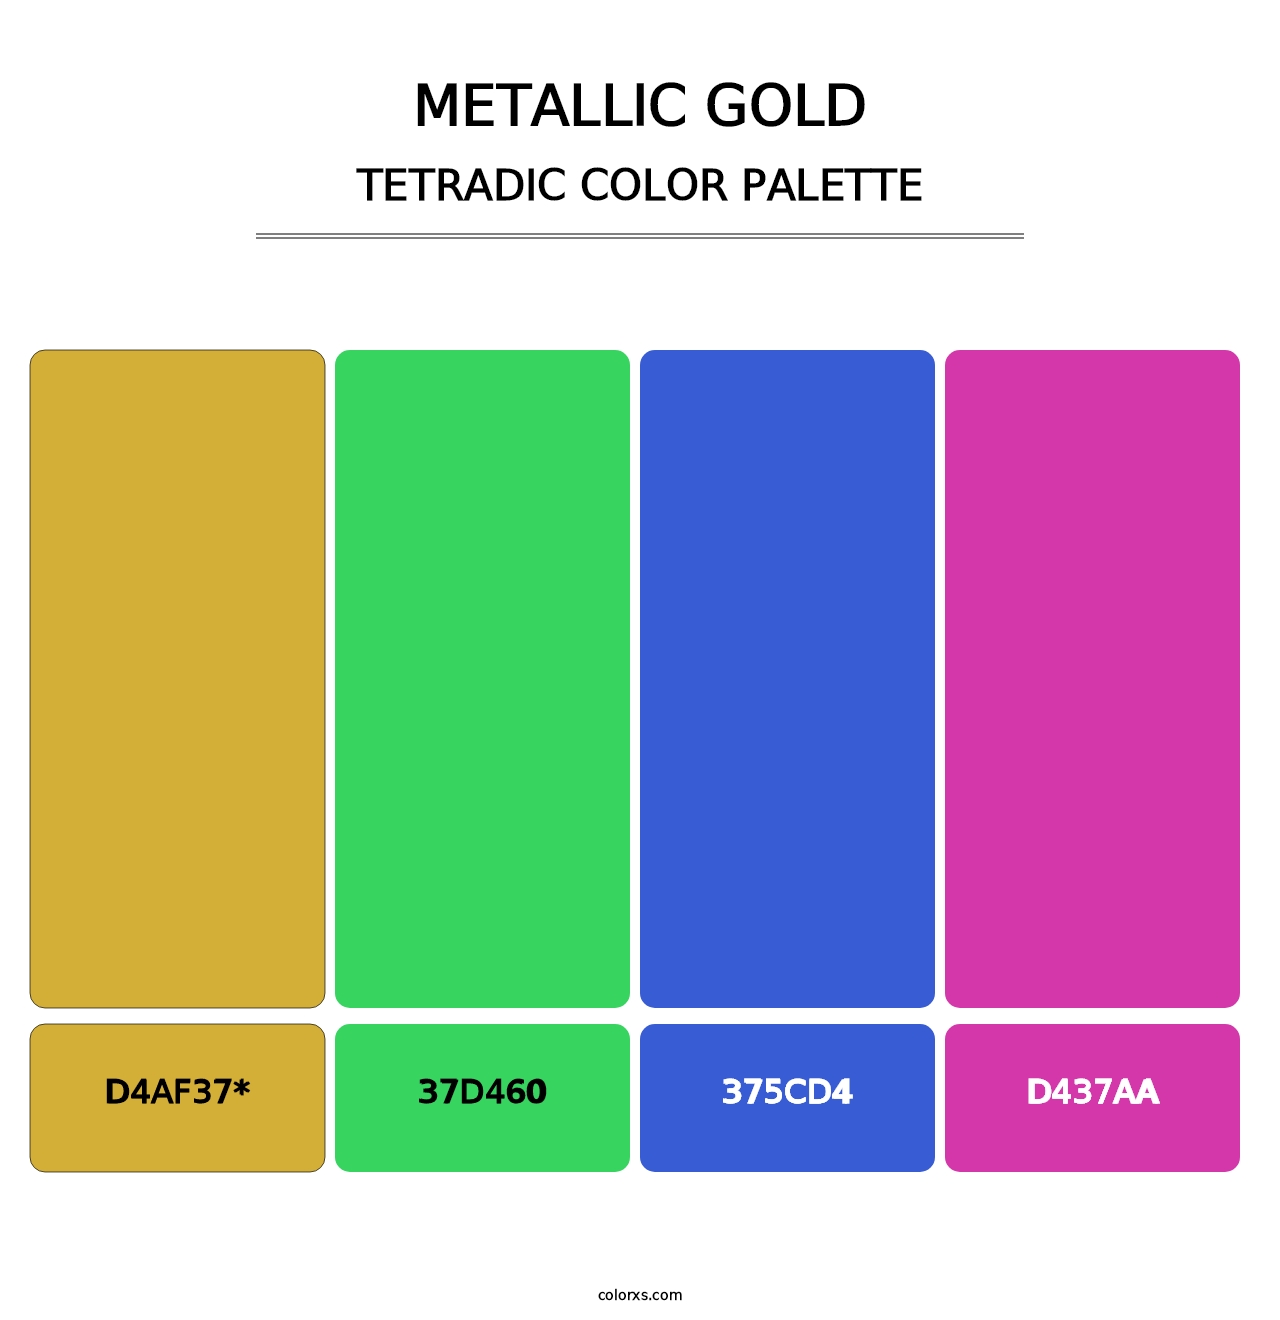 Metallic Gold - Tetradic Color Palette